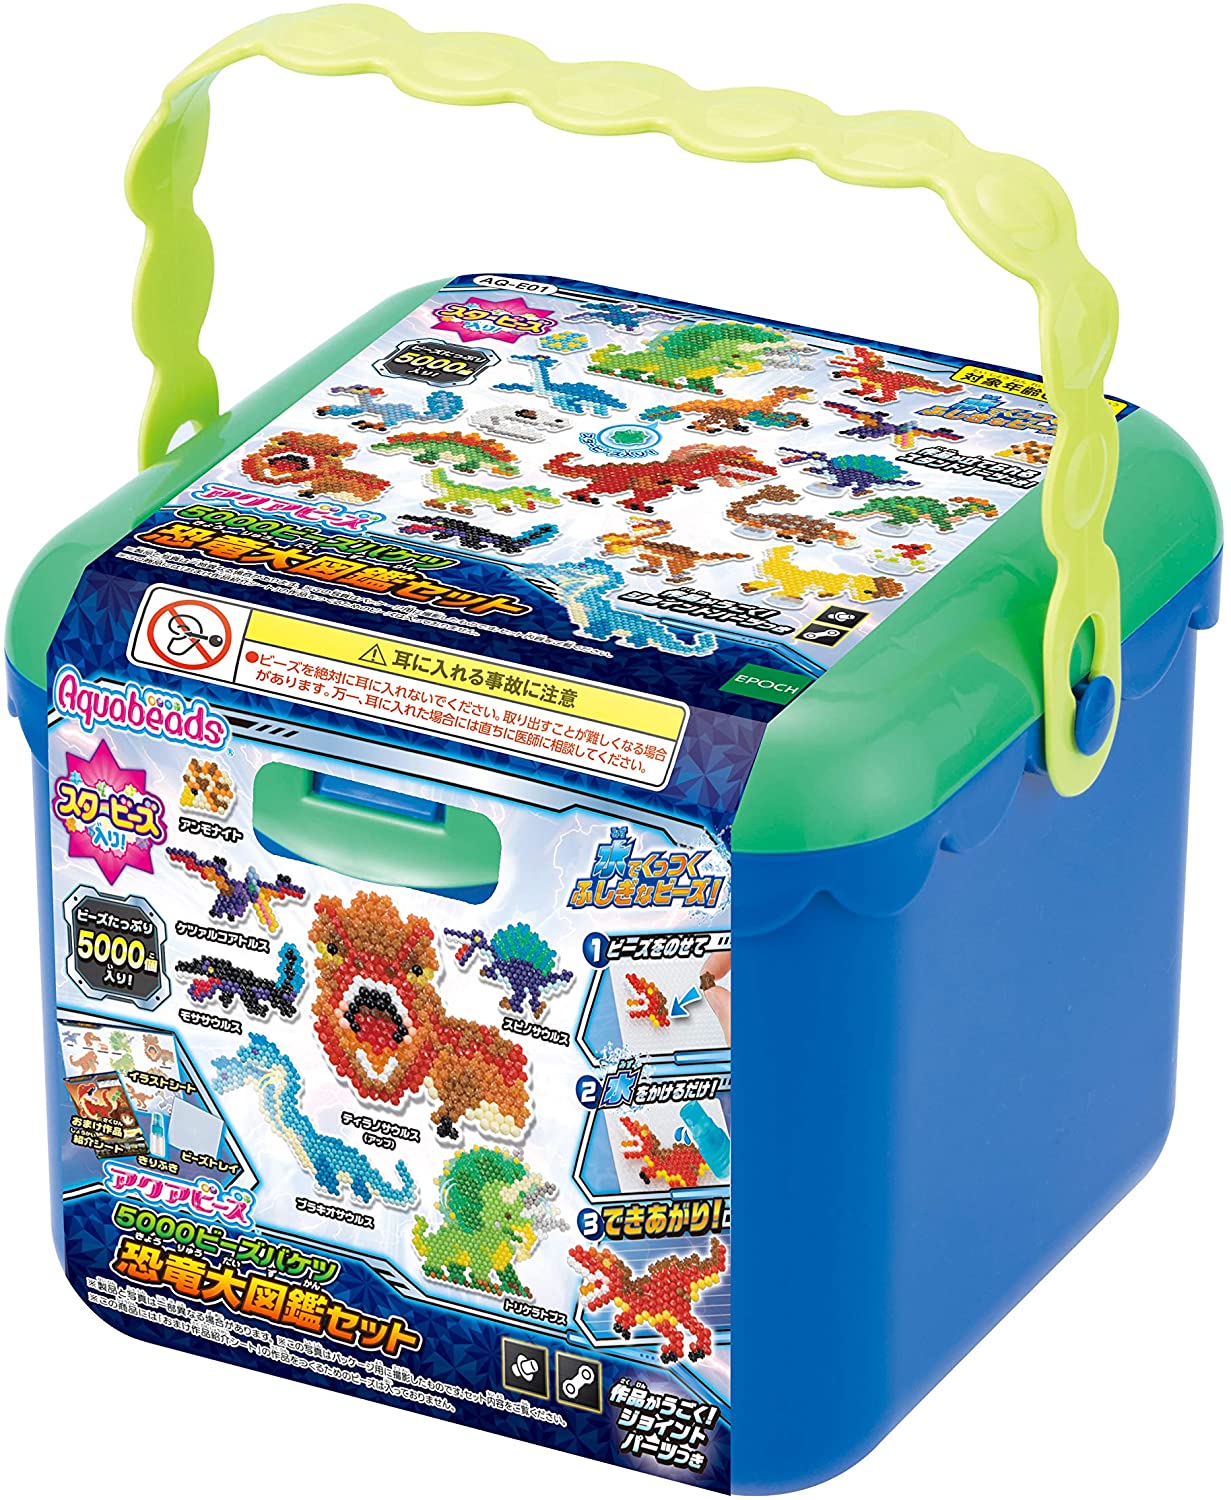 Aquabeads Super Mario All-Star Bucket Set [NEW]